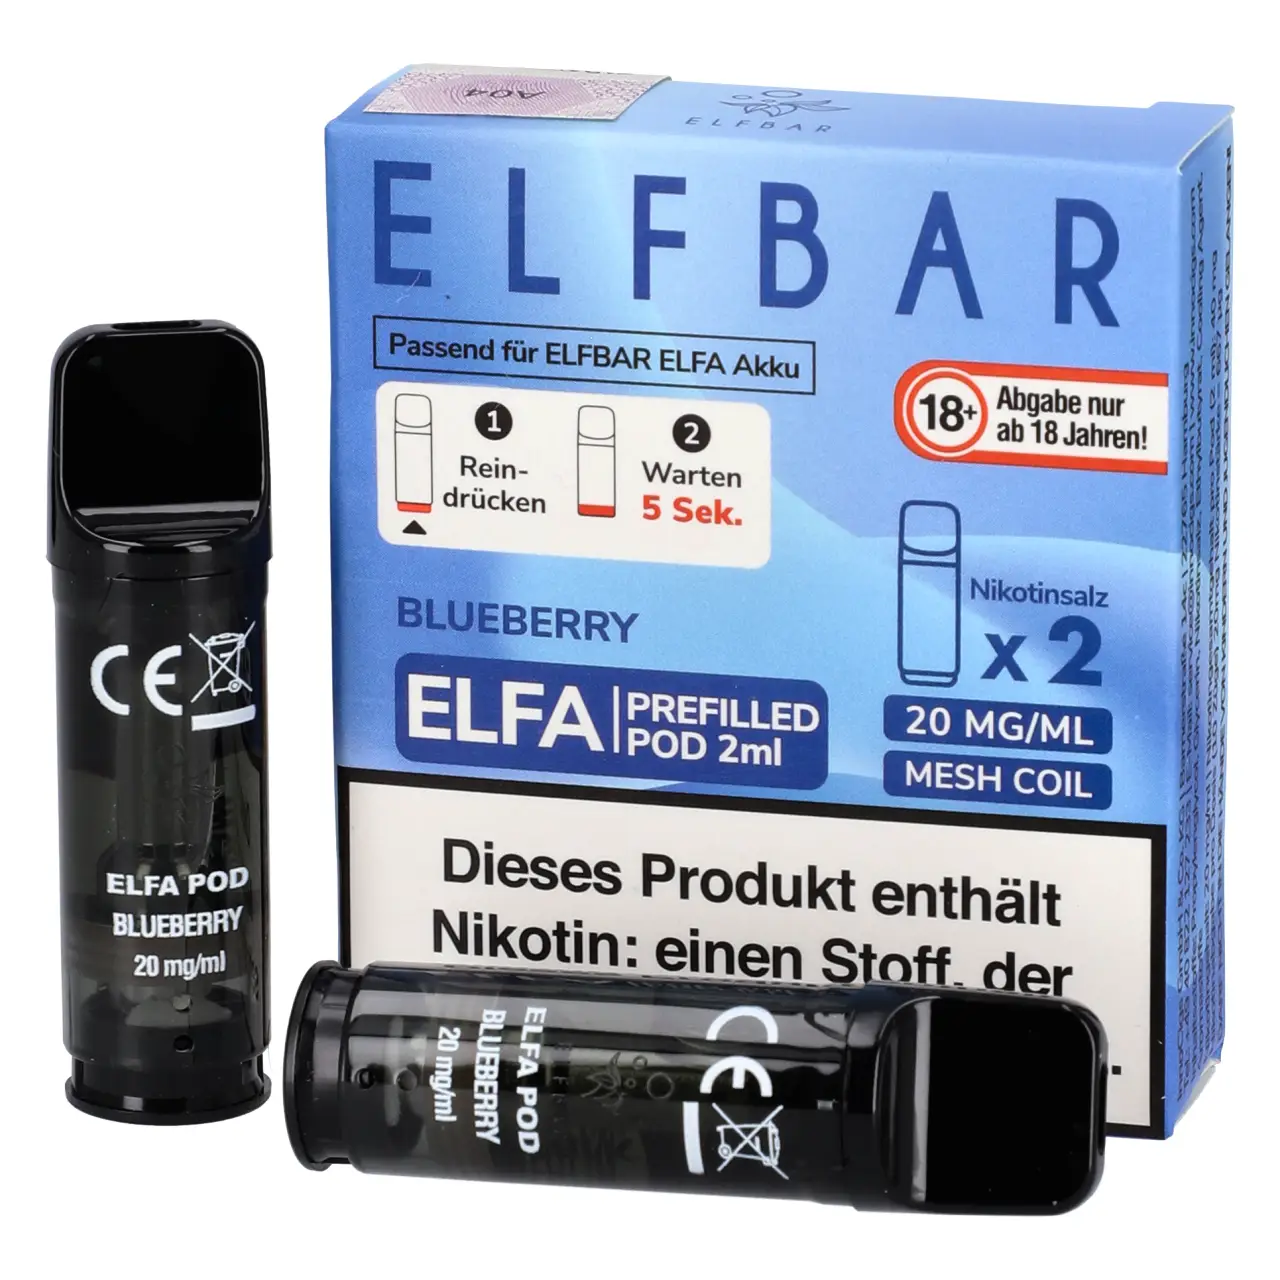 Blueberry - Elf Bar ELFA Prefilled POD für Mehrweg Vape - befüllt mit 2ml Liquid - 2er Packung